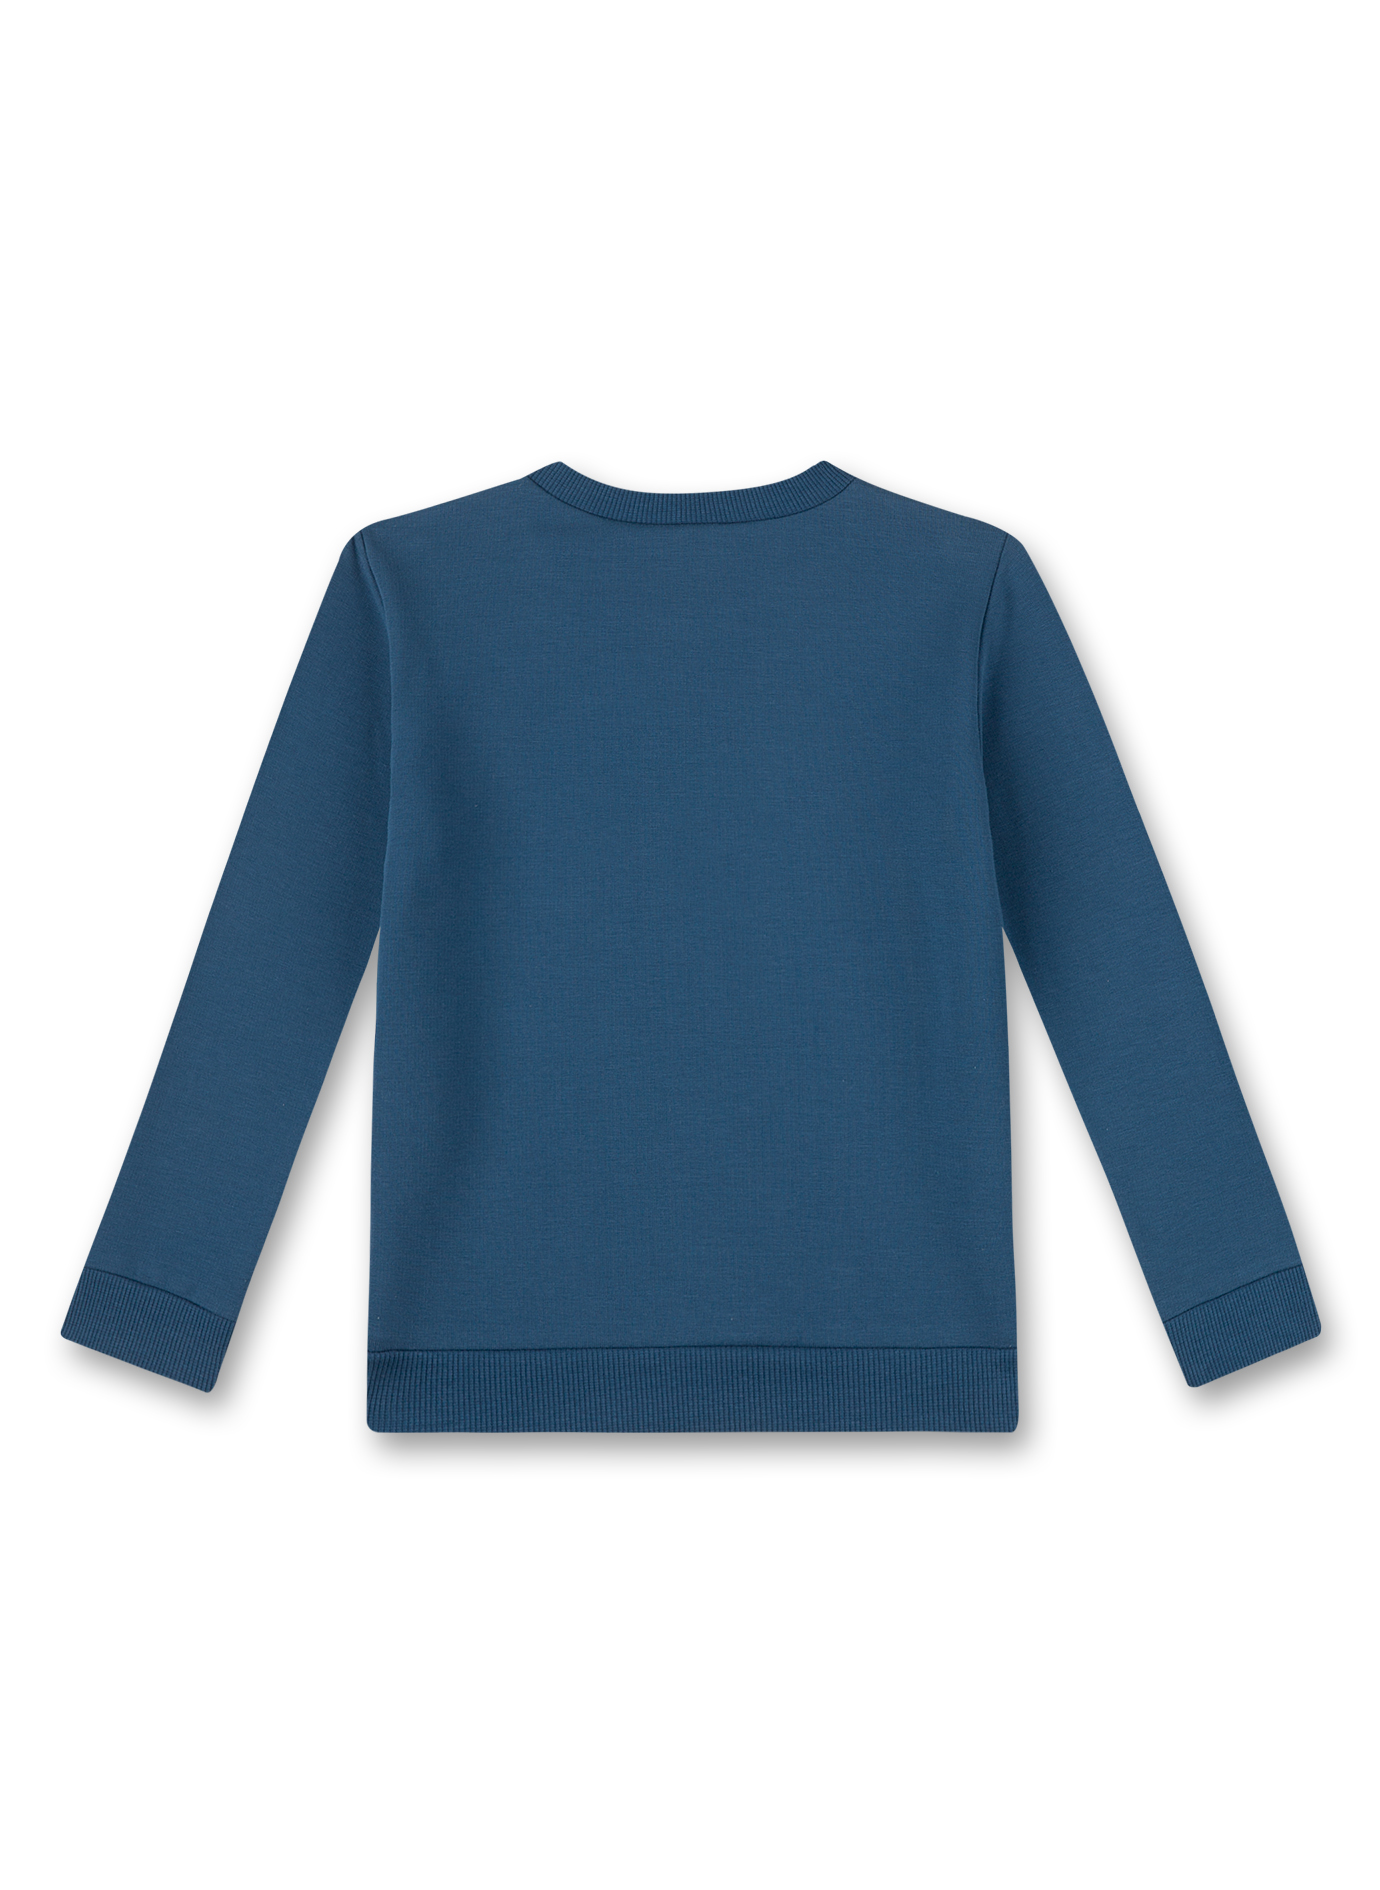 Jungen-Sweatshirt Blau